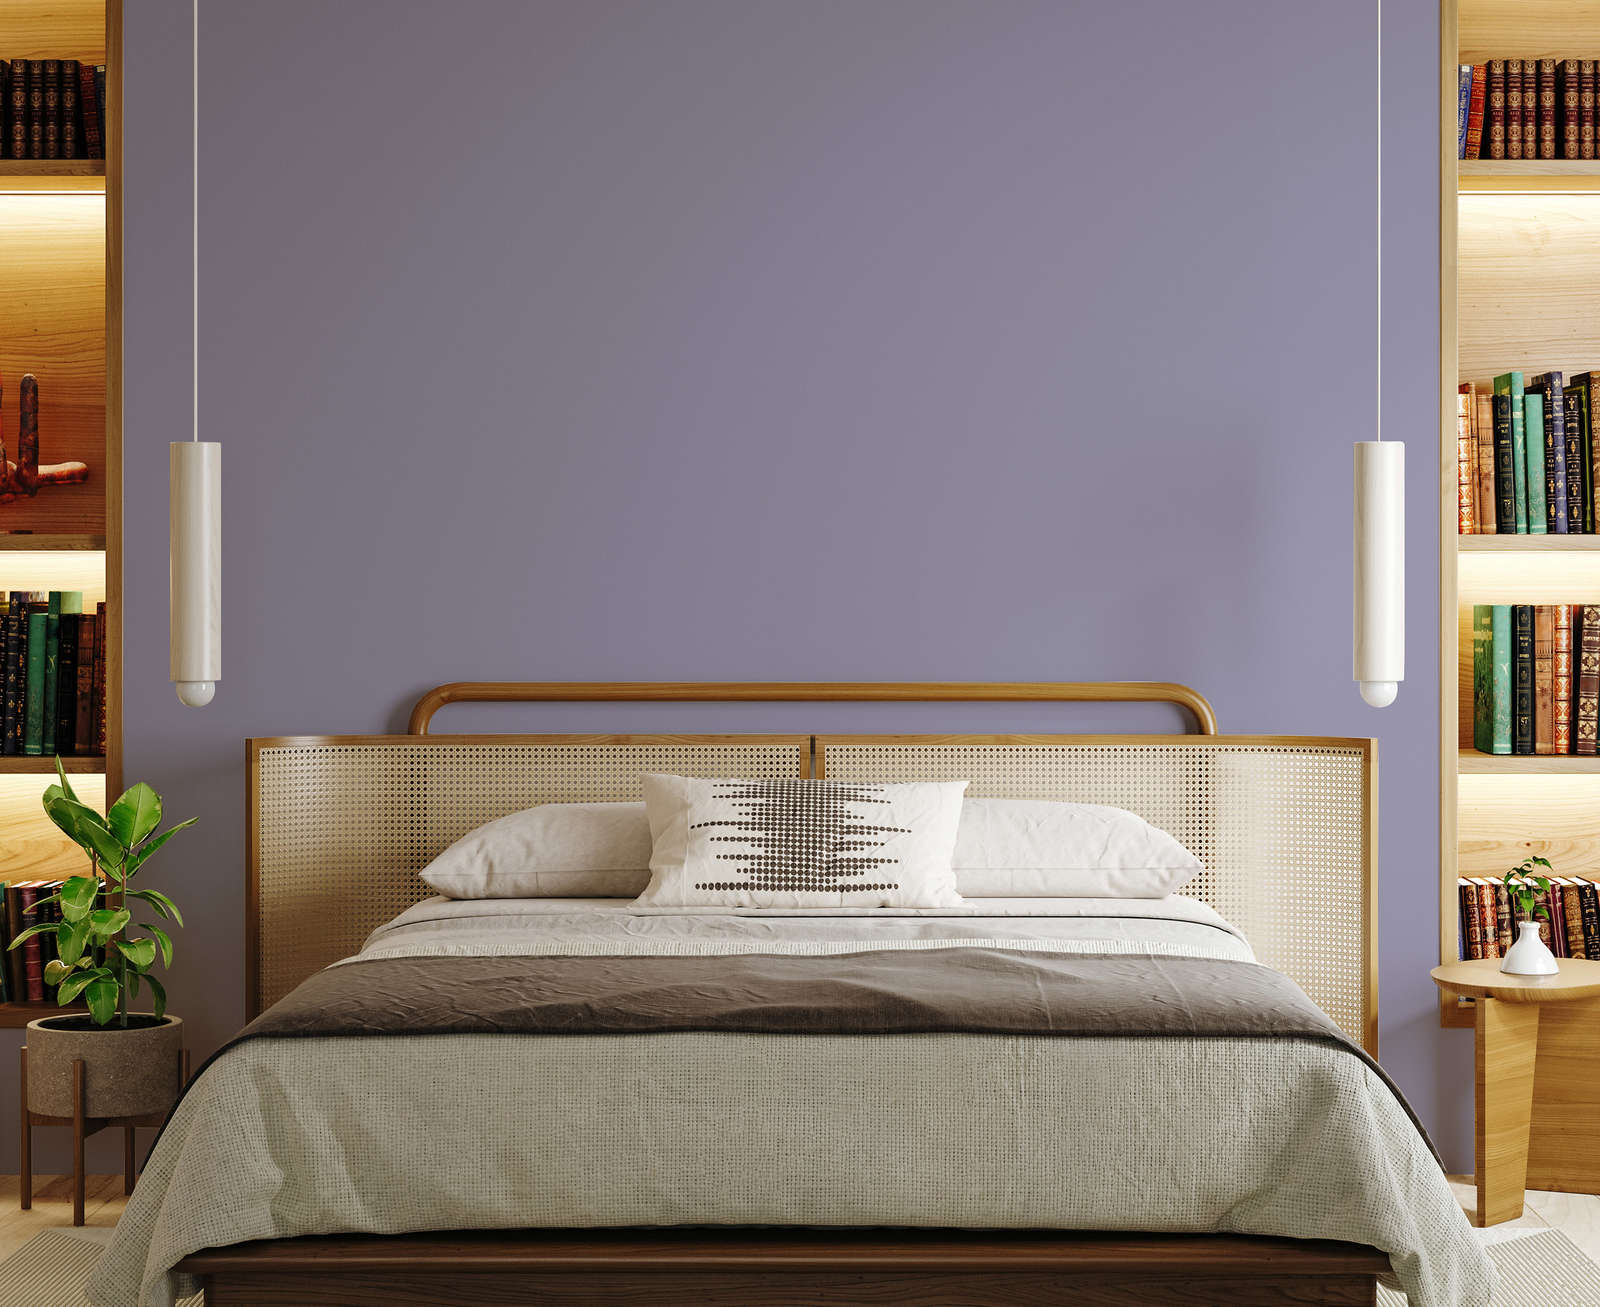             Premium Wall Paint Sensitive Lilac »Magical Mauve« NW204 – 2.5 litre
        